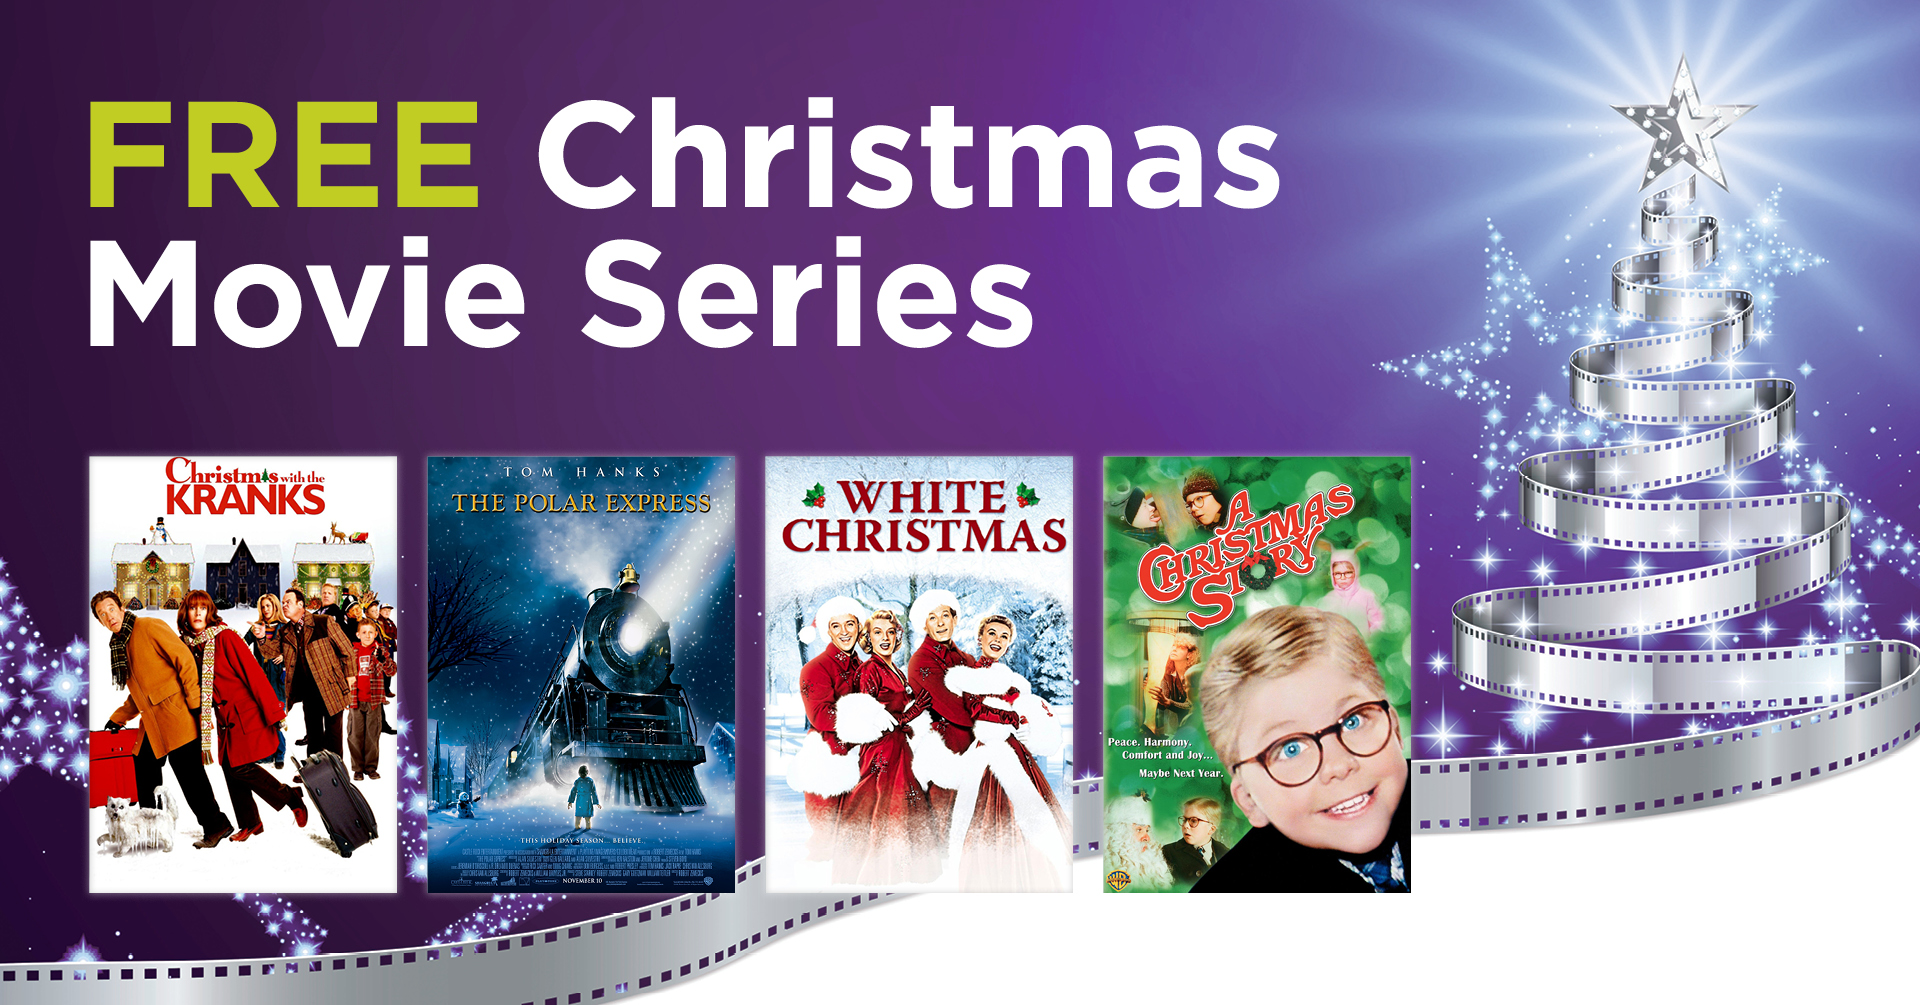 FREE Christmas Movie Series. Christmas with the Kranks. The Polar Express. White Christmas. A Christmas Story.